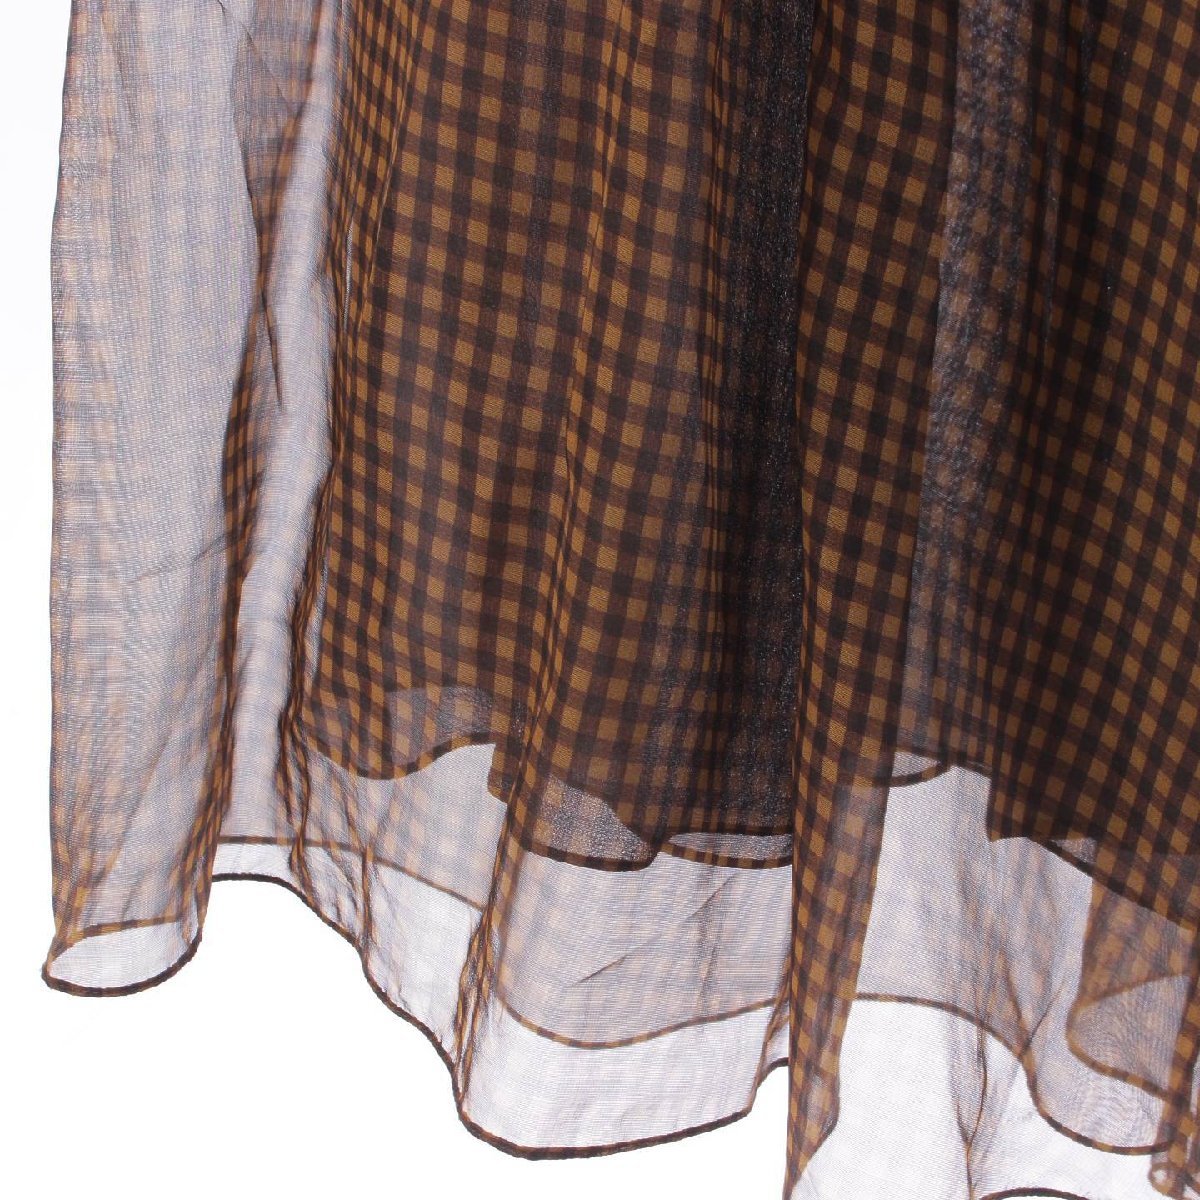 [ Fendi ]Fendi 19 year silk check side Zip skirt FQ7141 Brown 42 [ used ][ regular goods guarantee ]199415